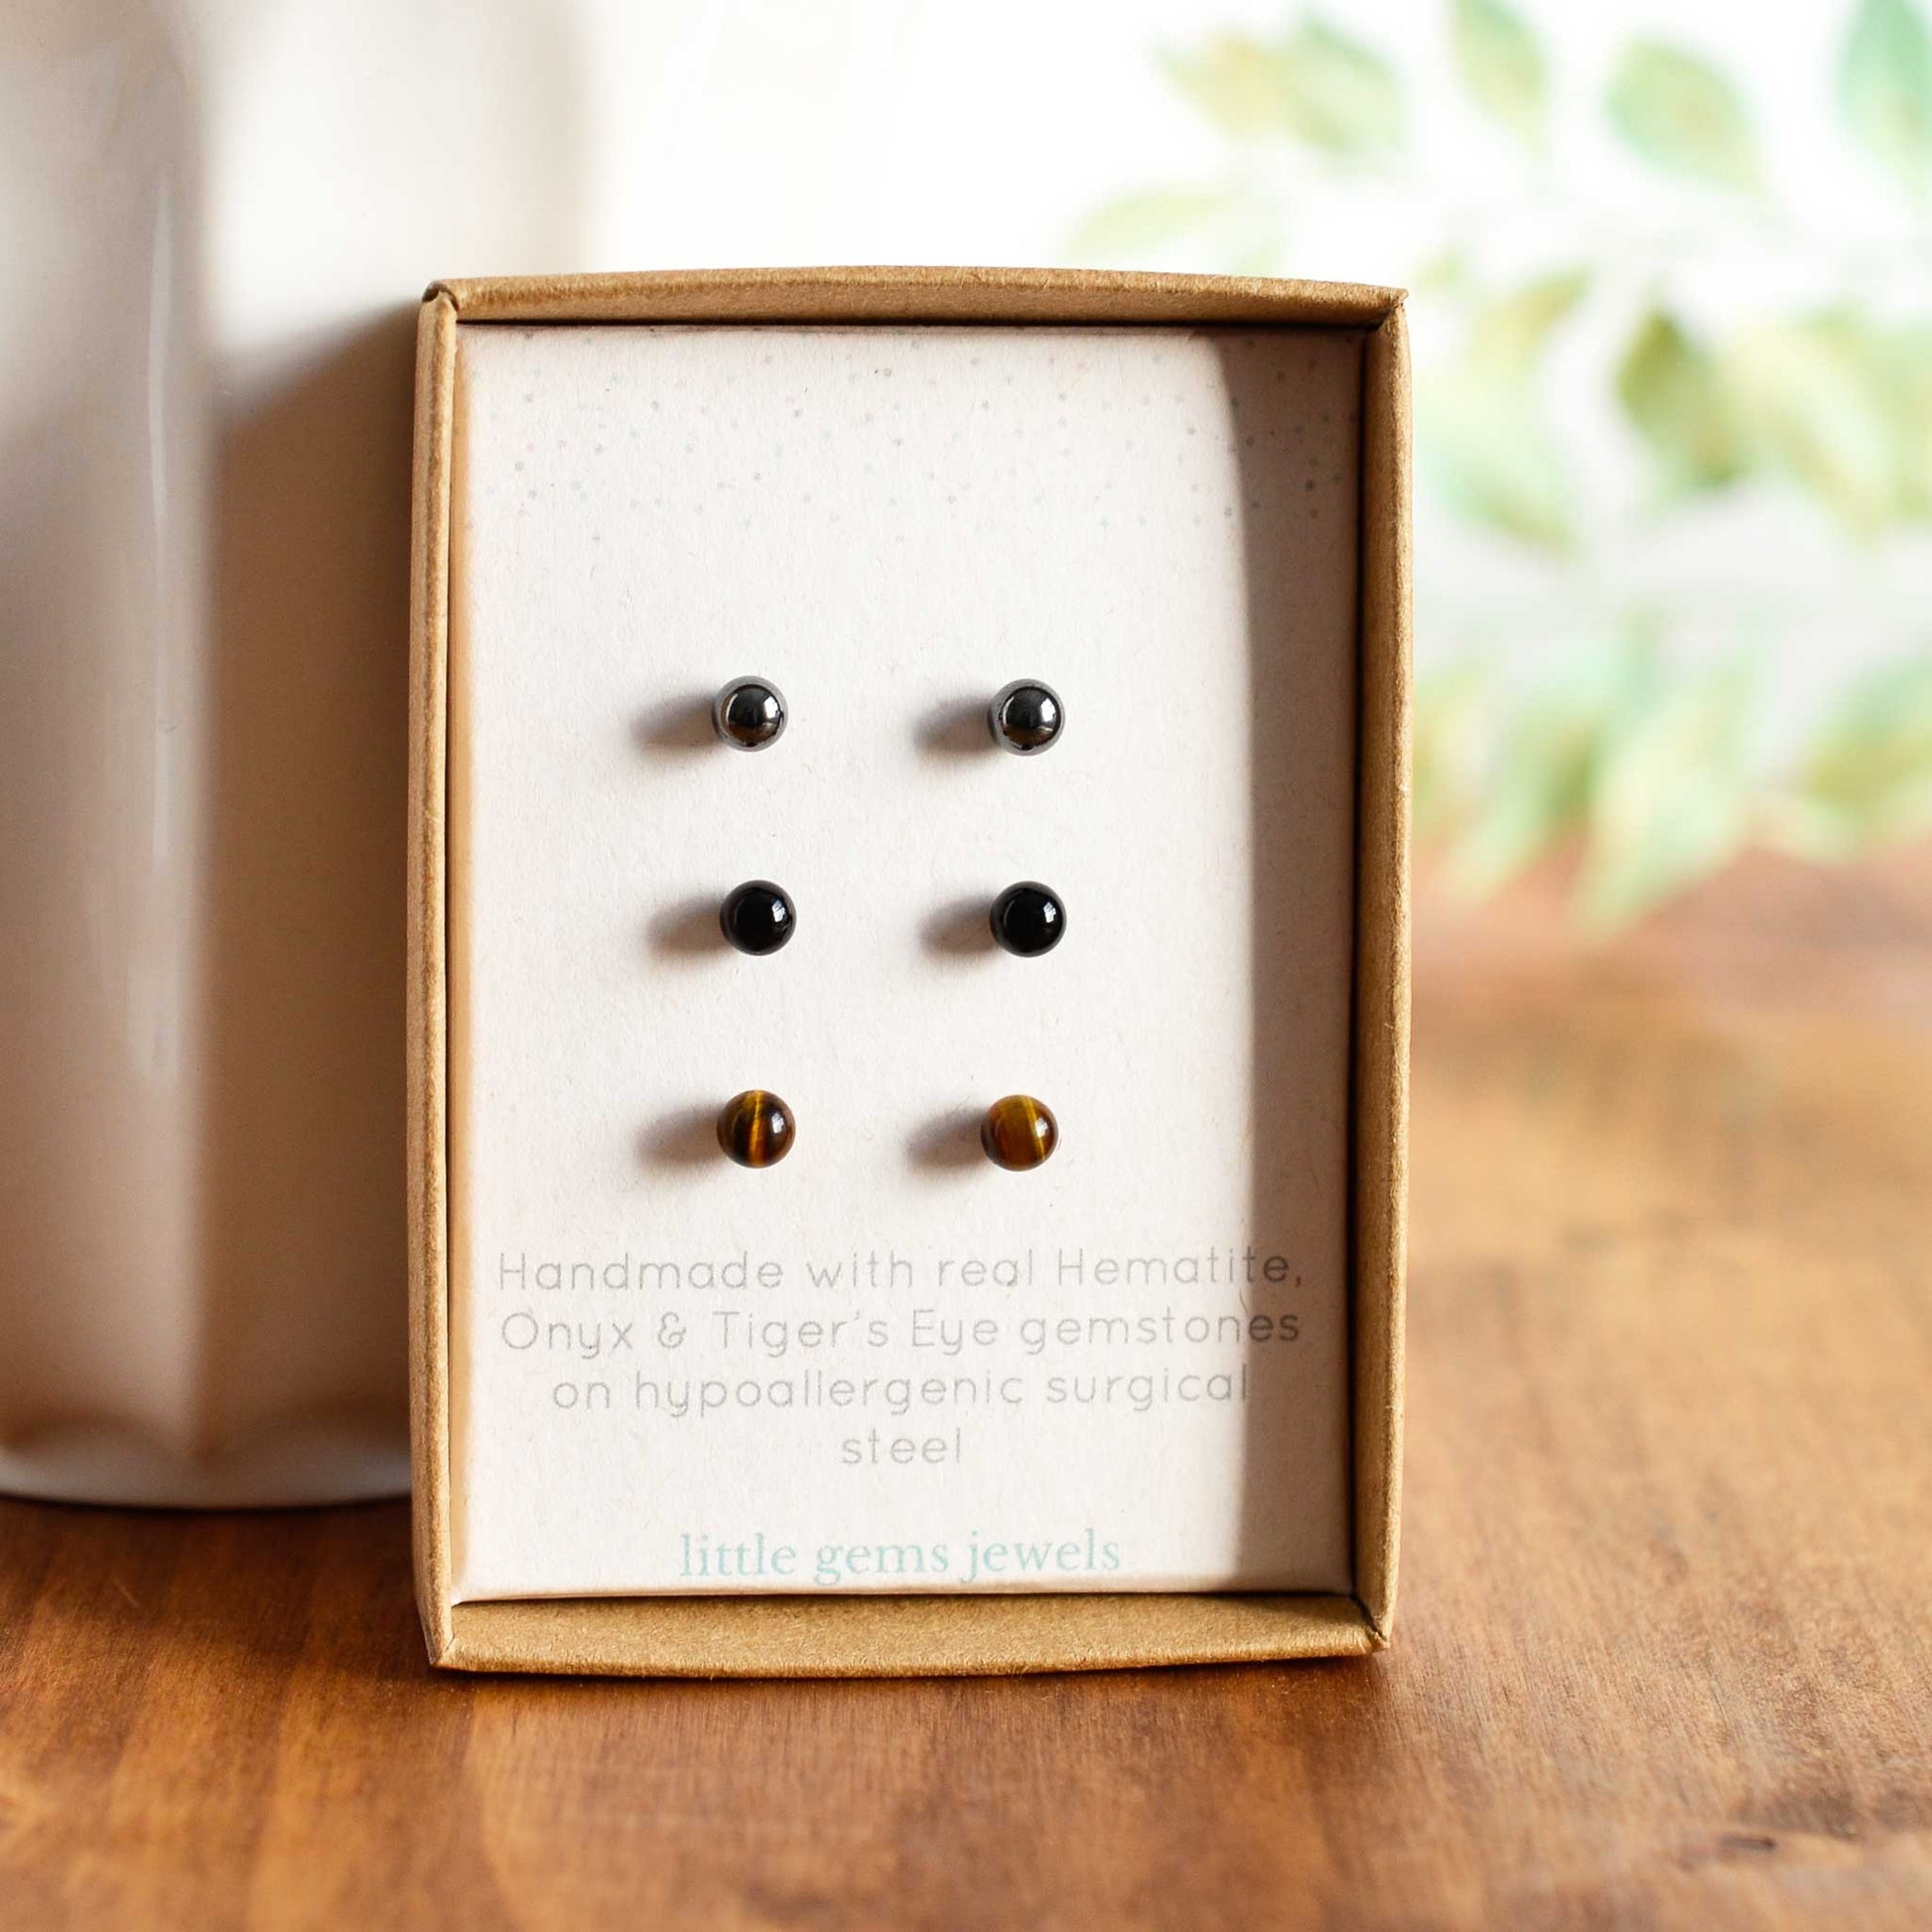 Hematite, Onyx & Tigers Eye gemstone stud earring set in eco friendly gift box